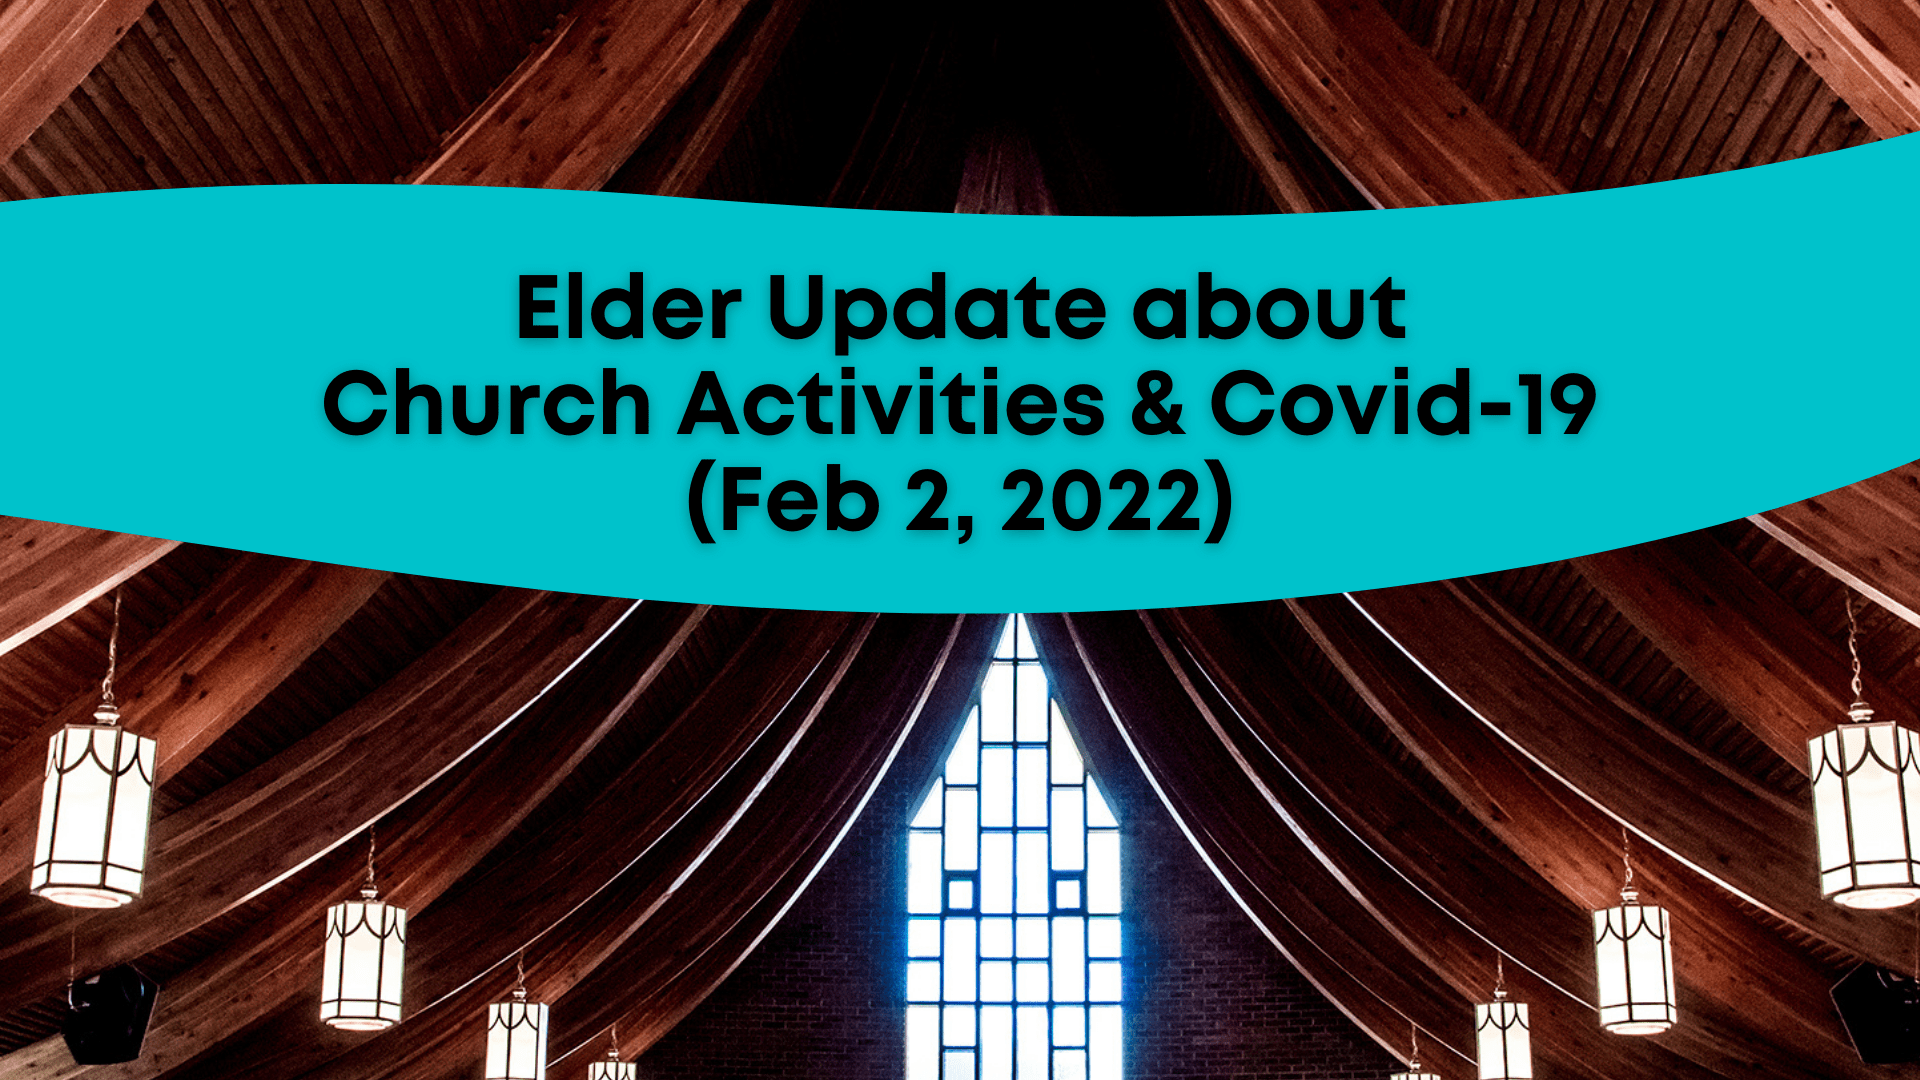 Elder Update about Church Activities & Covid-19 (Feb 2, 2022)